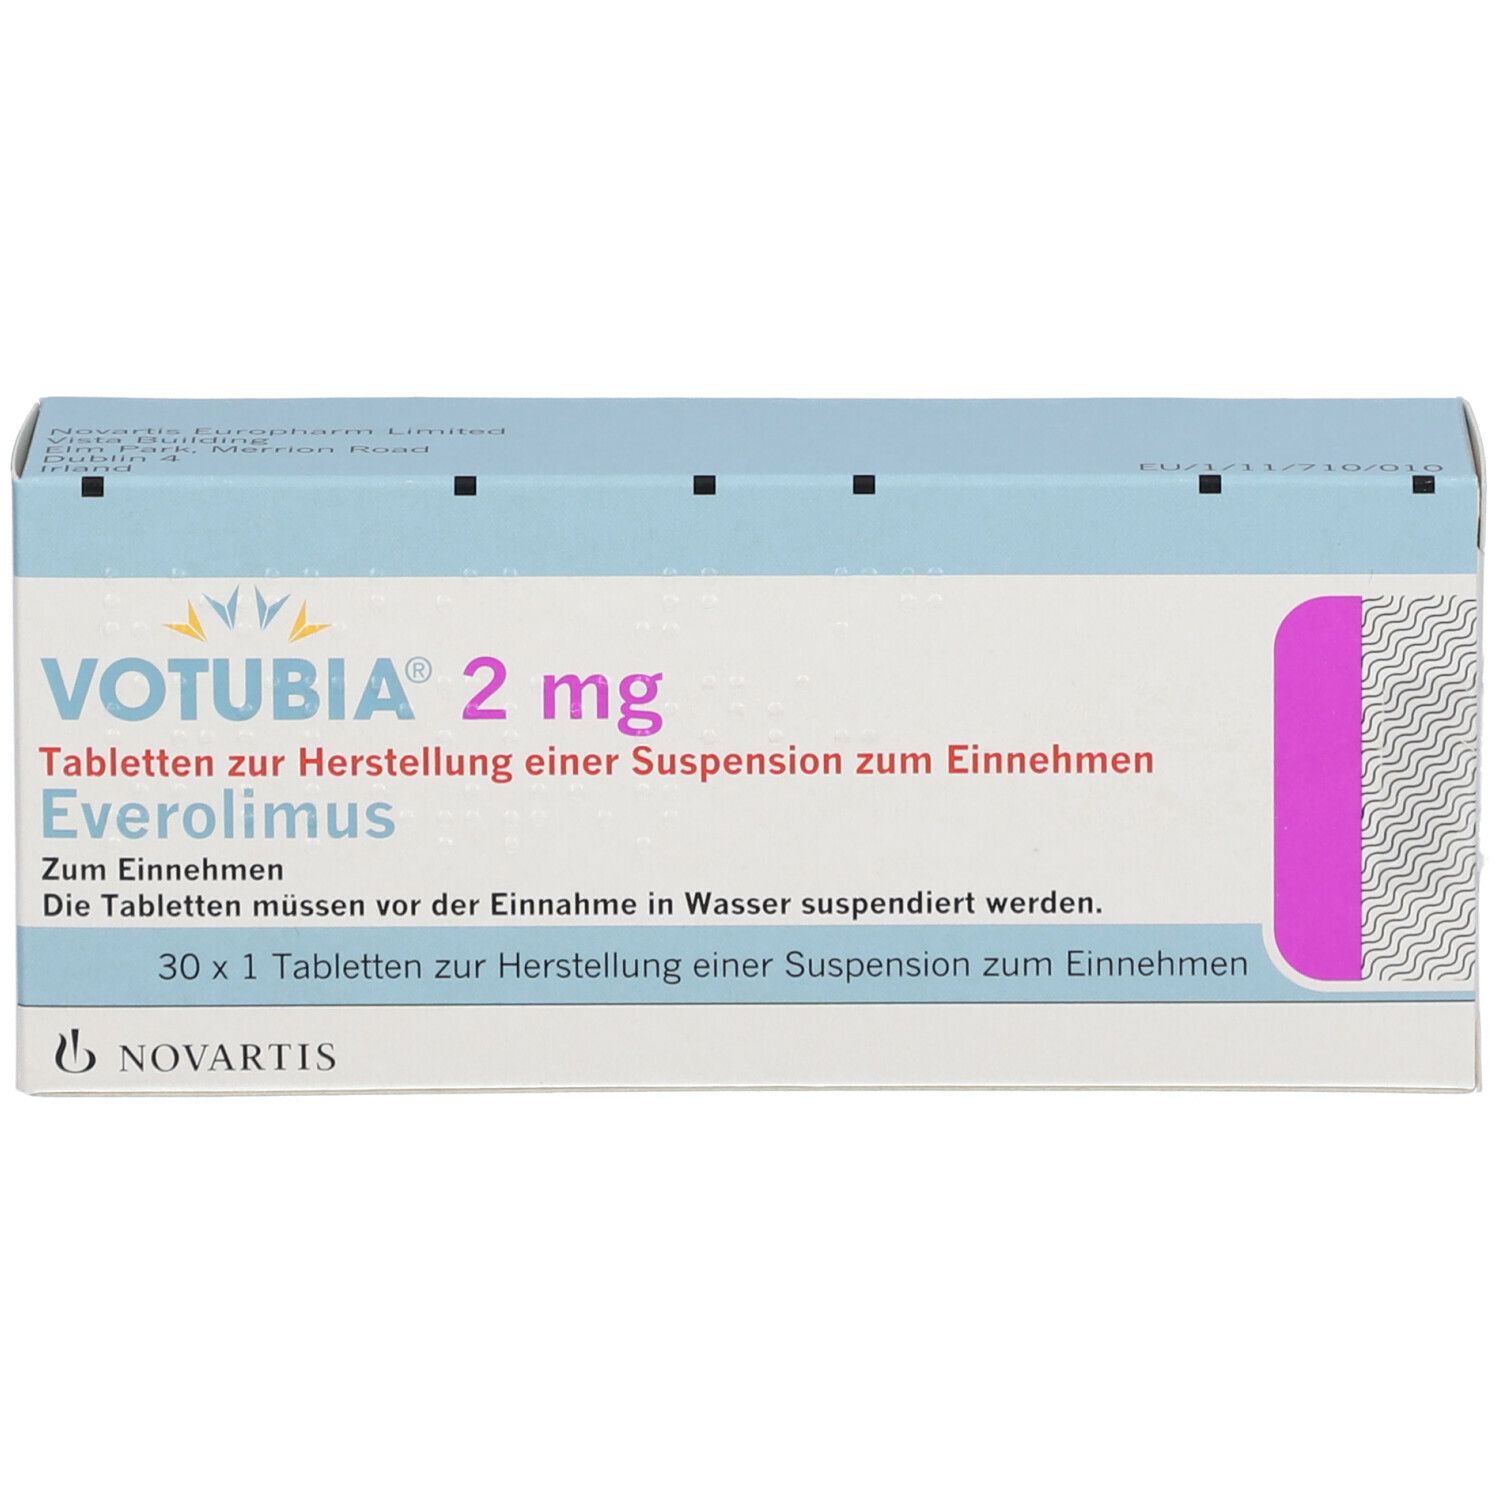 Votubia® 2 mg